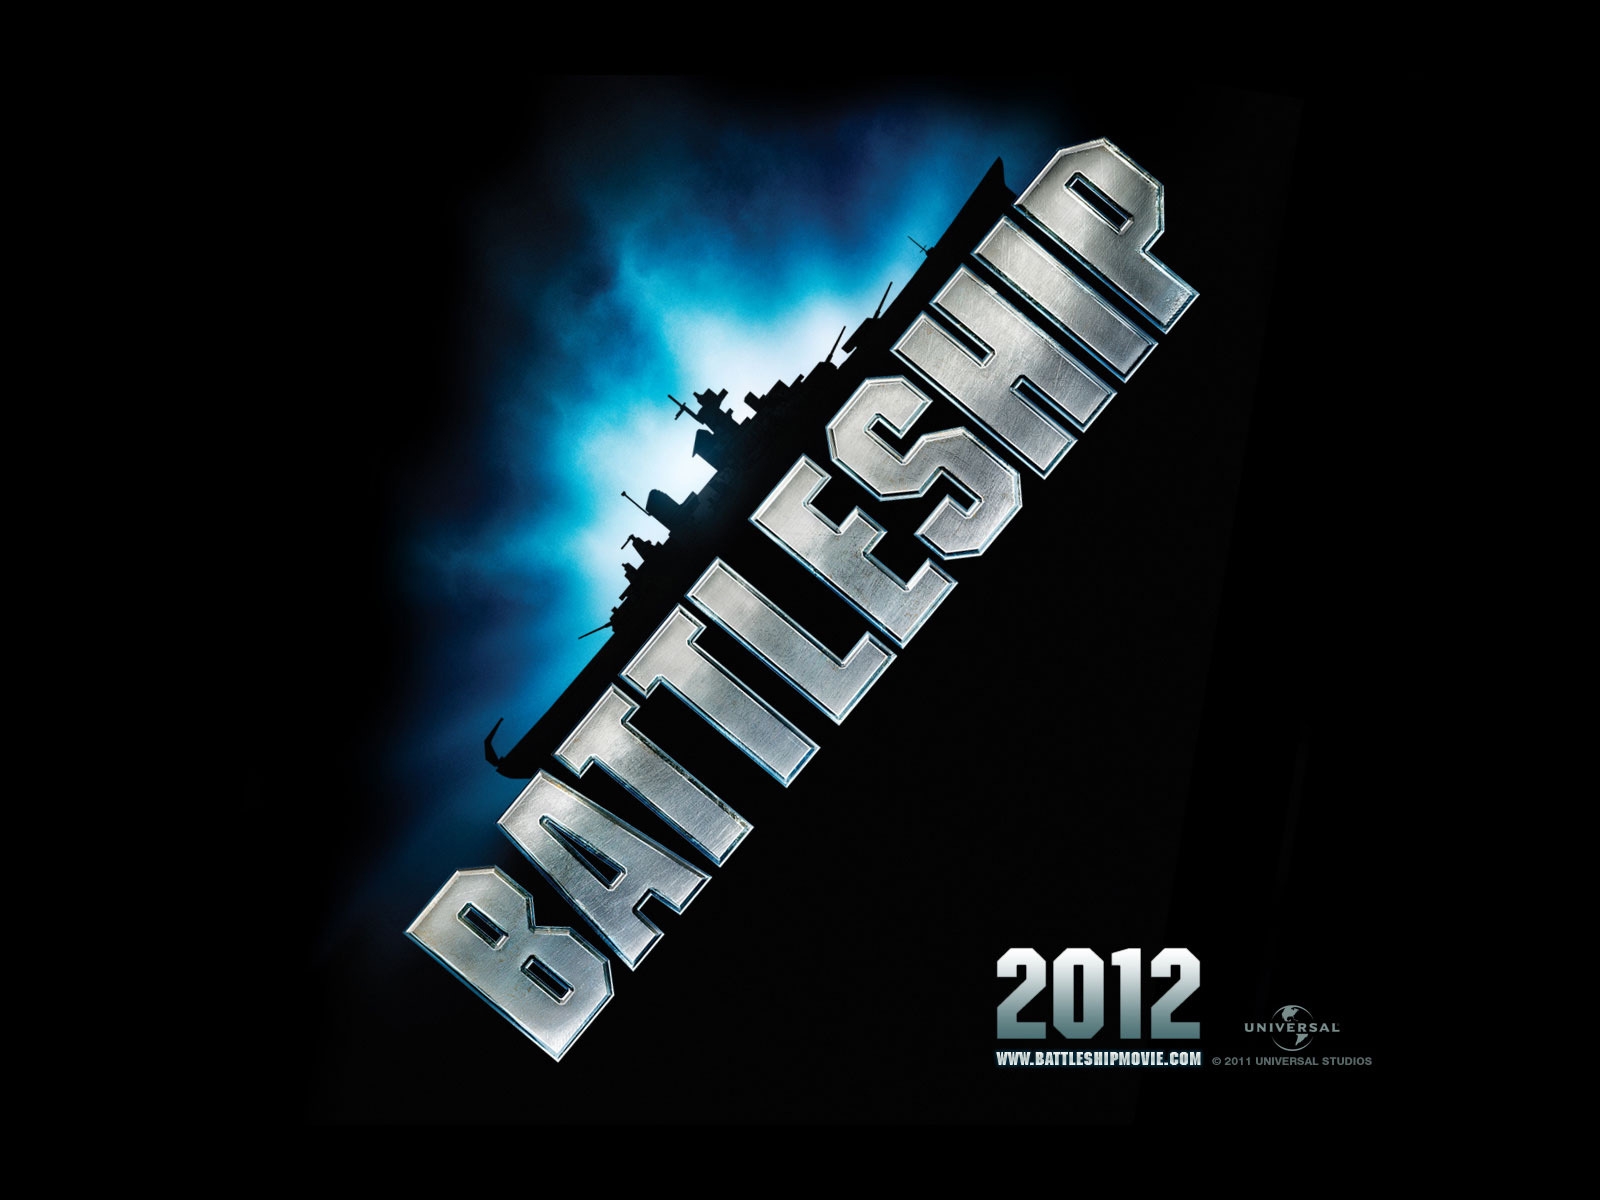 Battleship Movie for 1600 x 1200 resolution